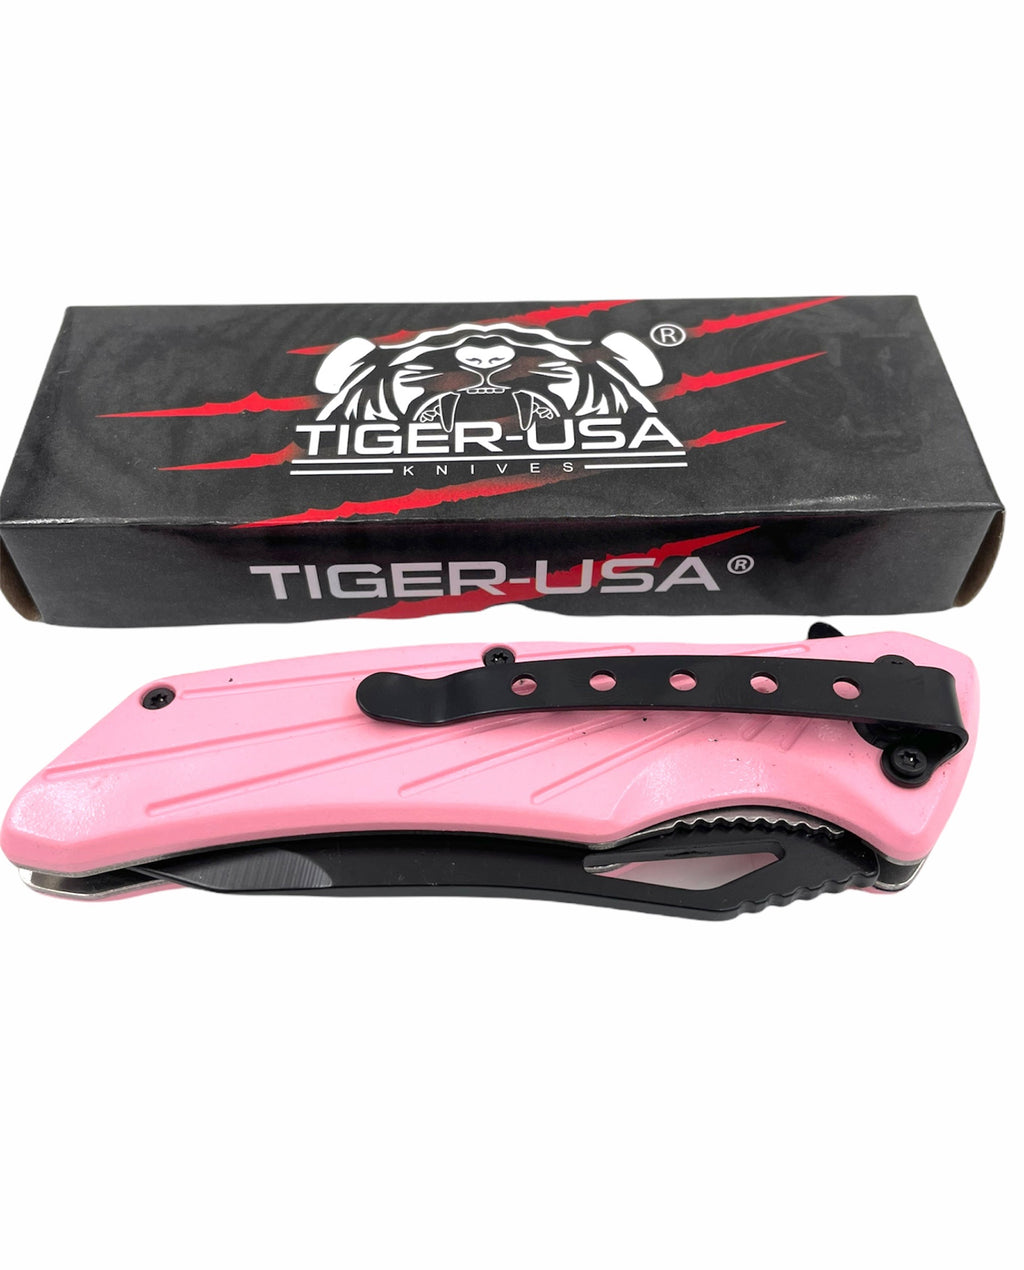 Tiger USA Spring Action Knife PINK Tanto